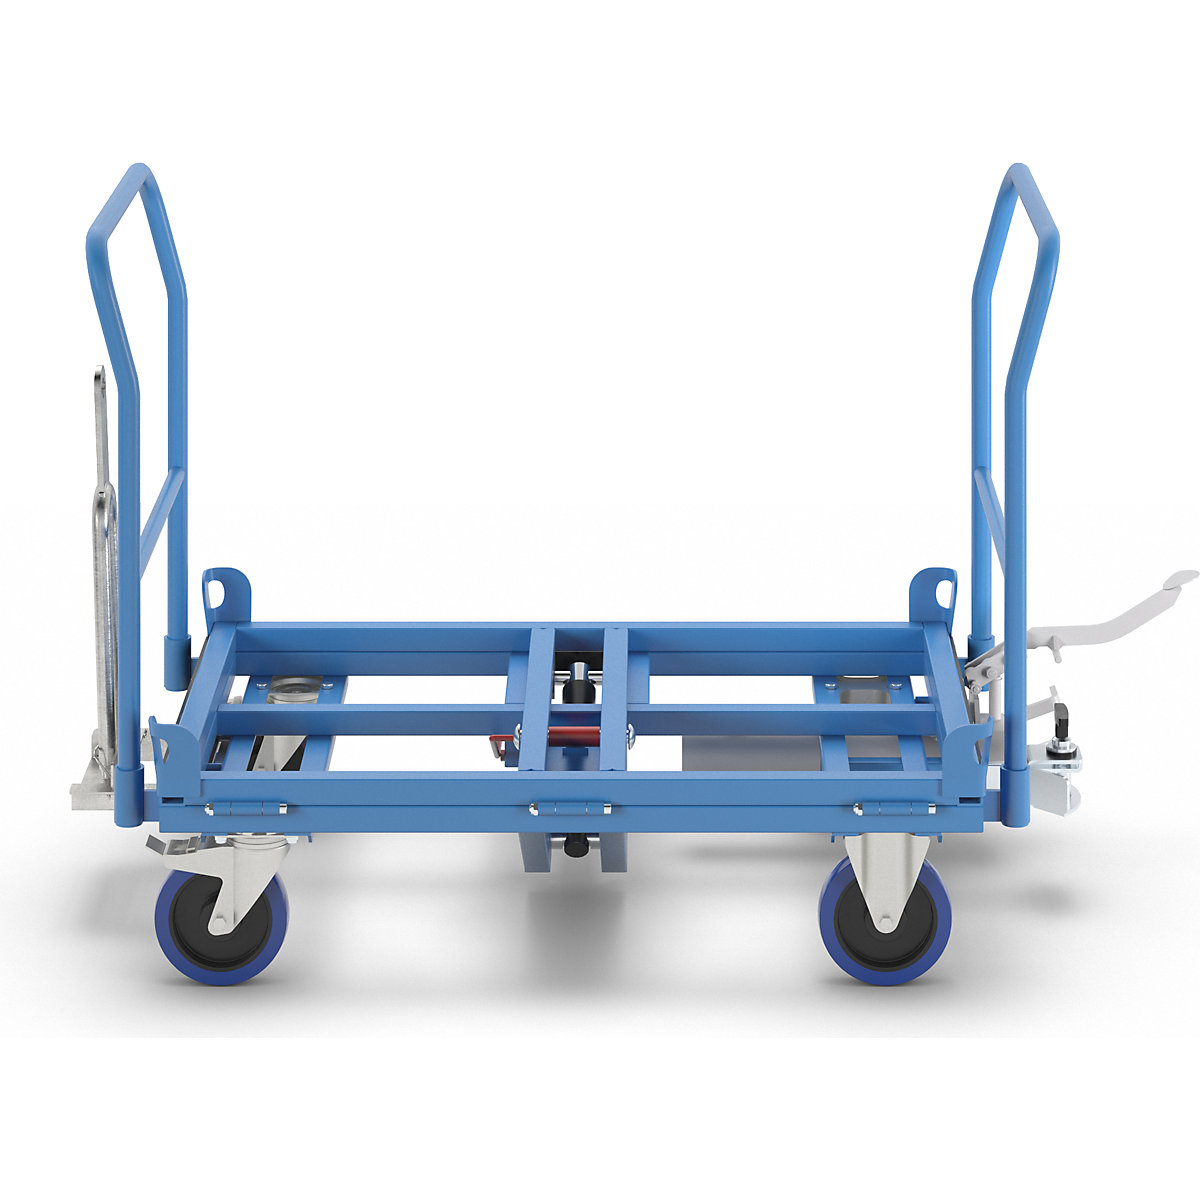 Nagibni transportni okvir, nosilnost 1000 kg – eurokraft pro (Slika izdelka 23)-22